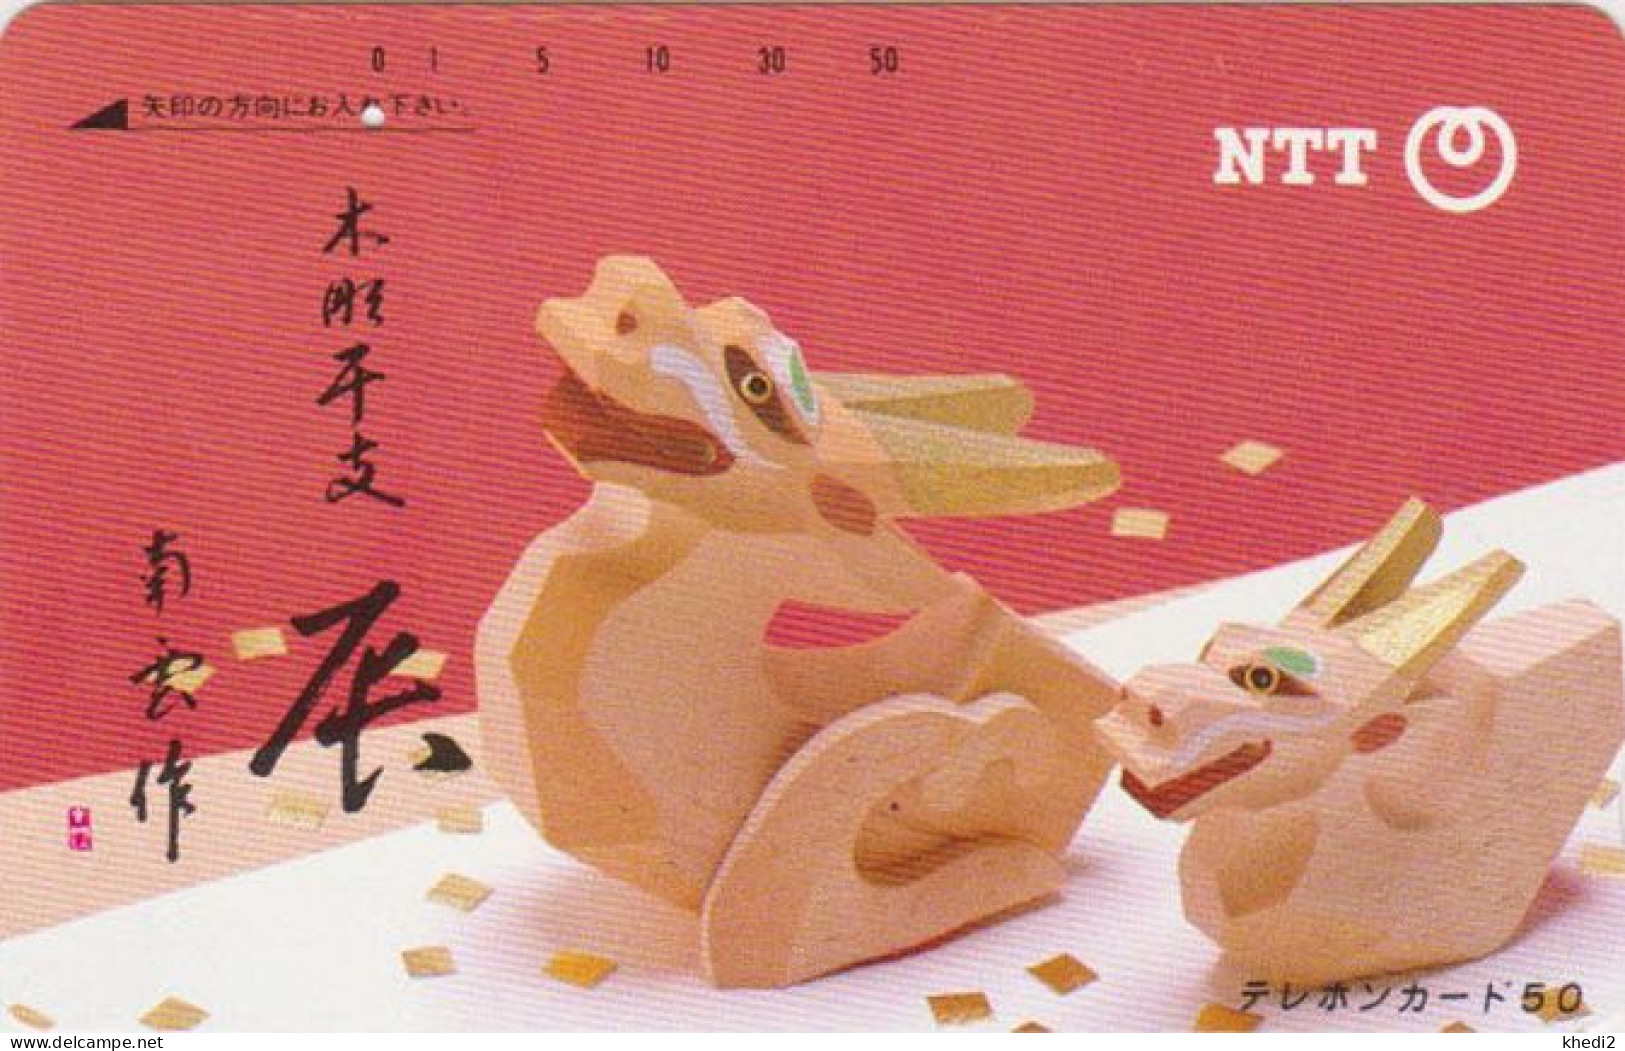 Rare Télécarte JAPON / NTT 330-094 ** ONE PUNCH ** - DRAGON Zodiaque - Horoscope Zodiac JAPAN Phonecard - Japan